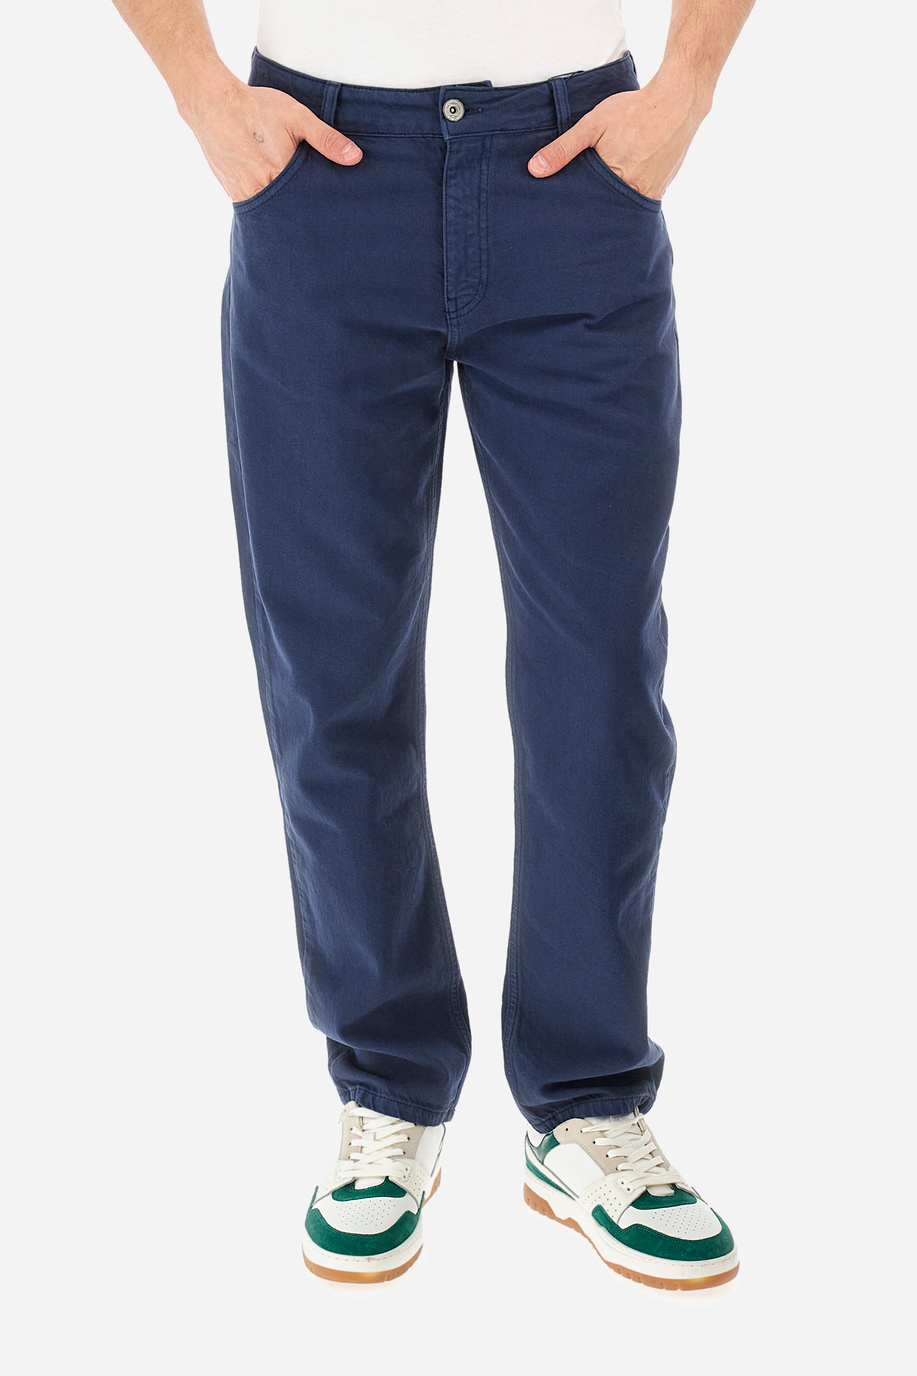 Bluelans Men's Pants Elasticated Waist Trendy Casual Drawstring Slim-Fit  Men's Trousers Summer Spring Flat-Front Pants Khaki 2XL at Amazon Men's  Clothing store